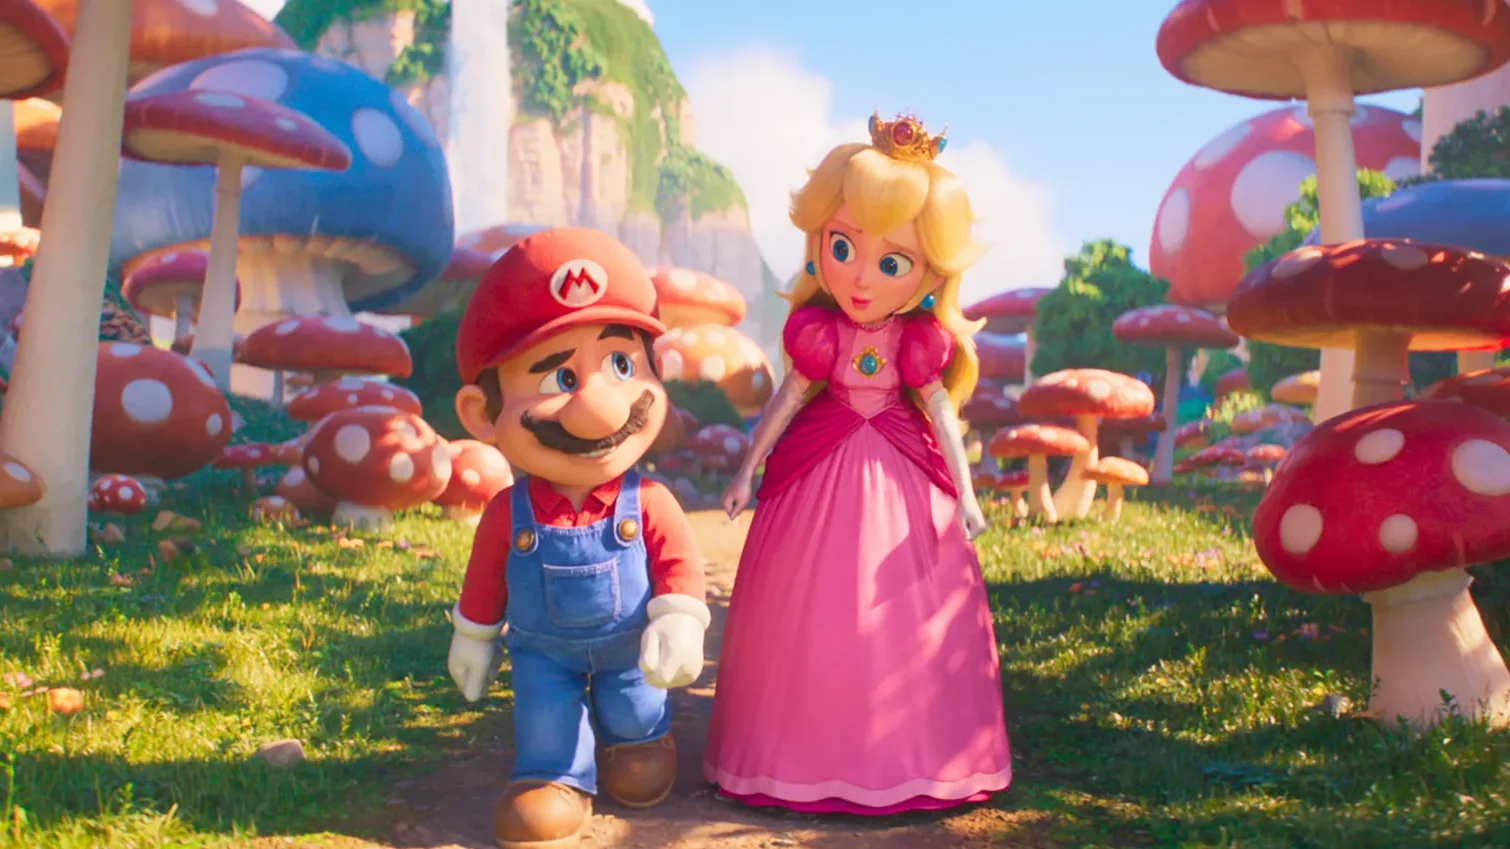 Banner bài review Phim Anh Em Super Mario